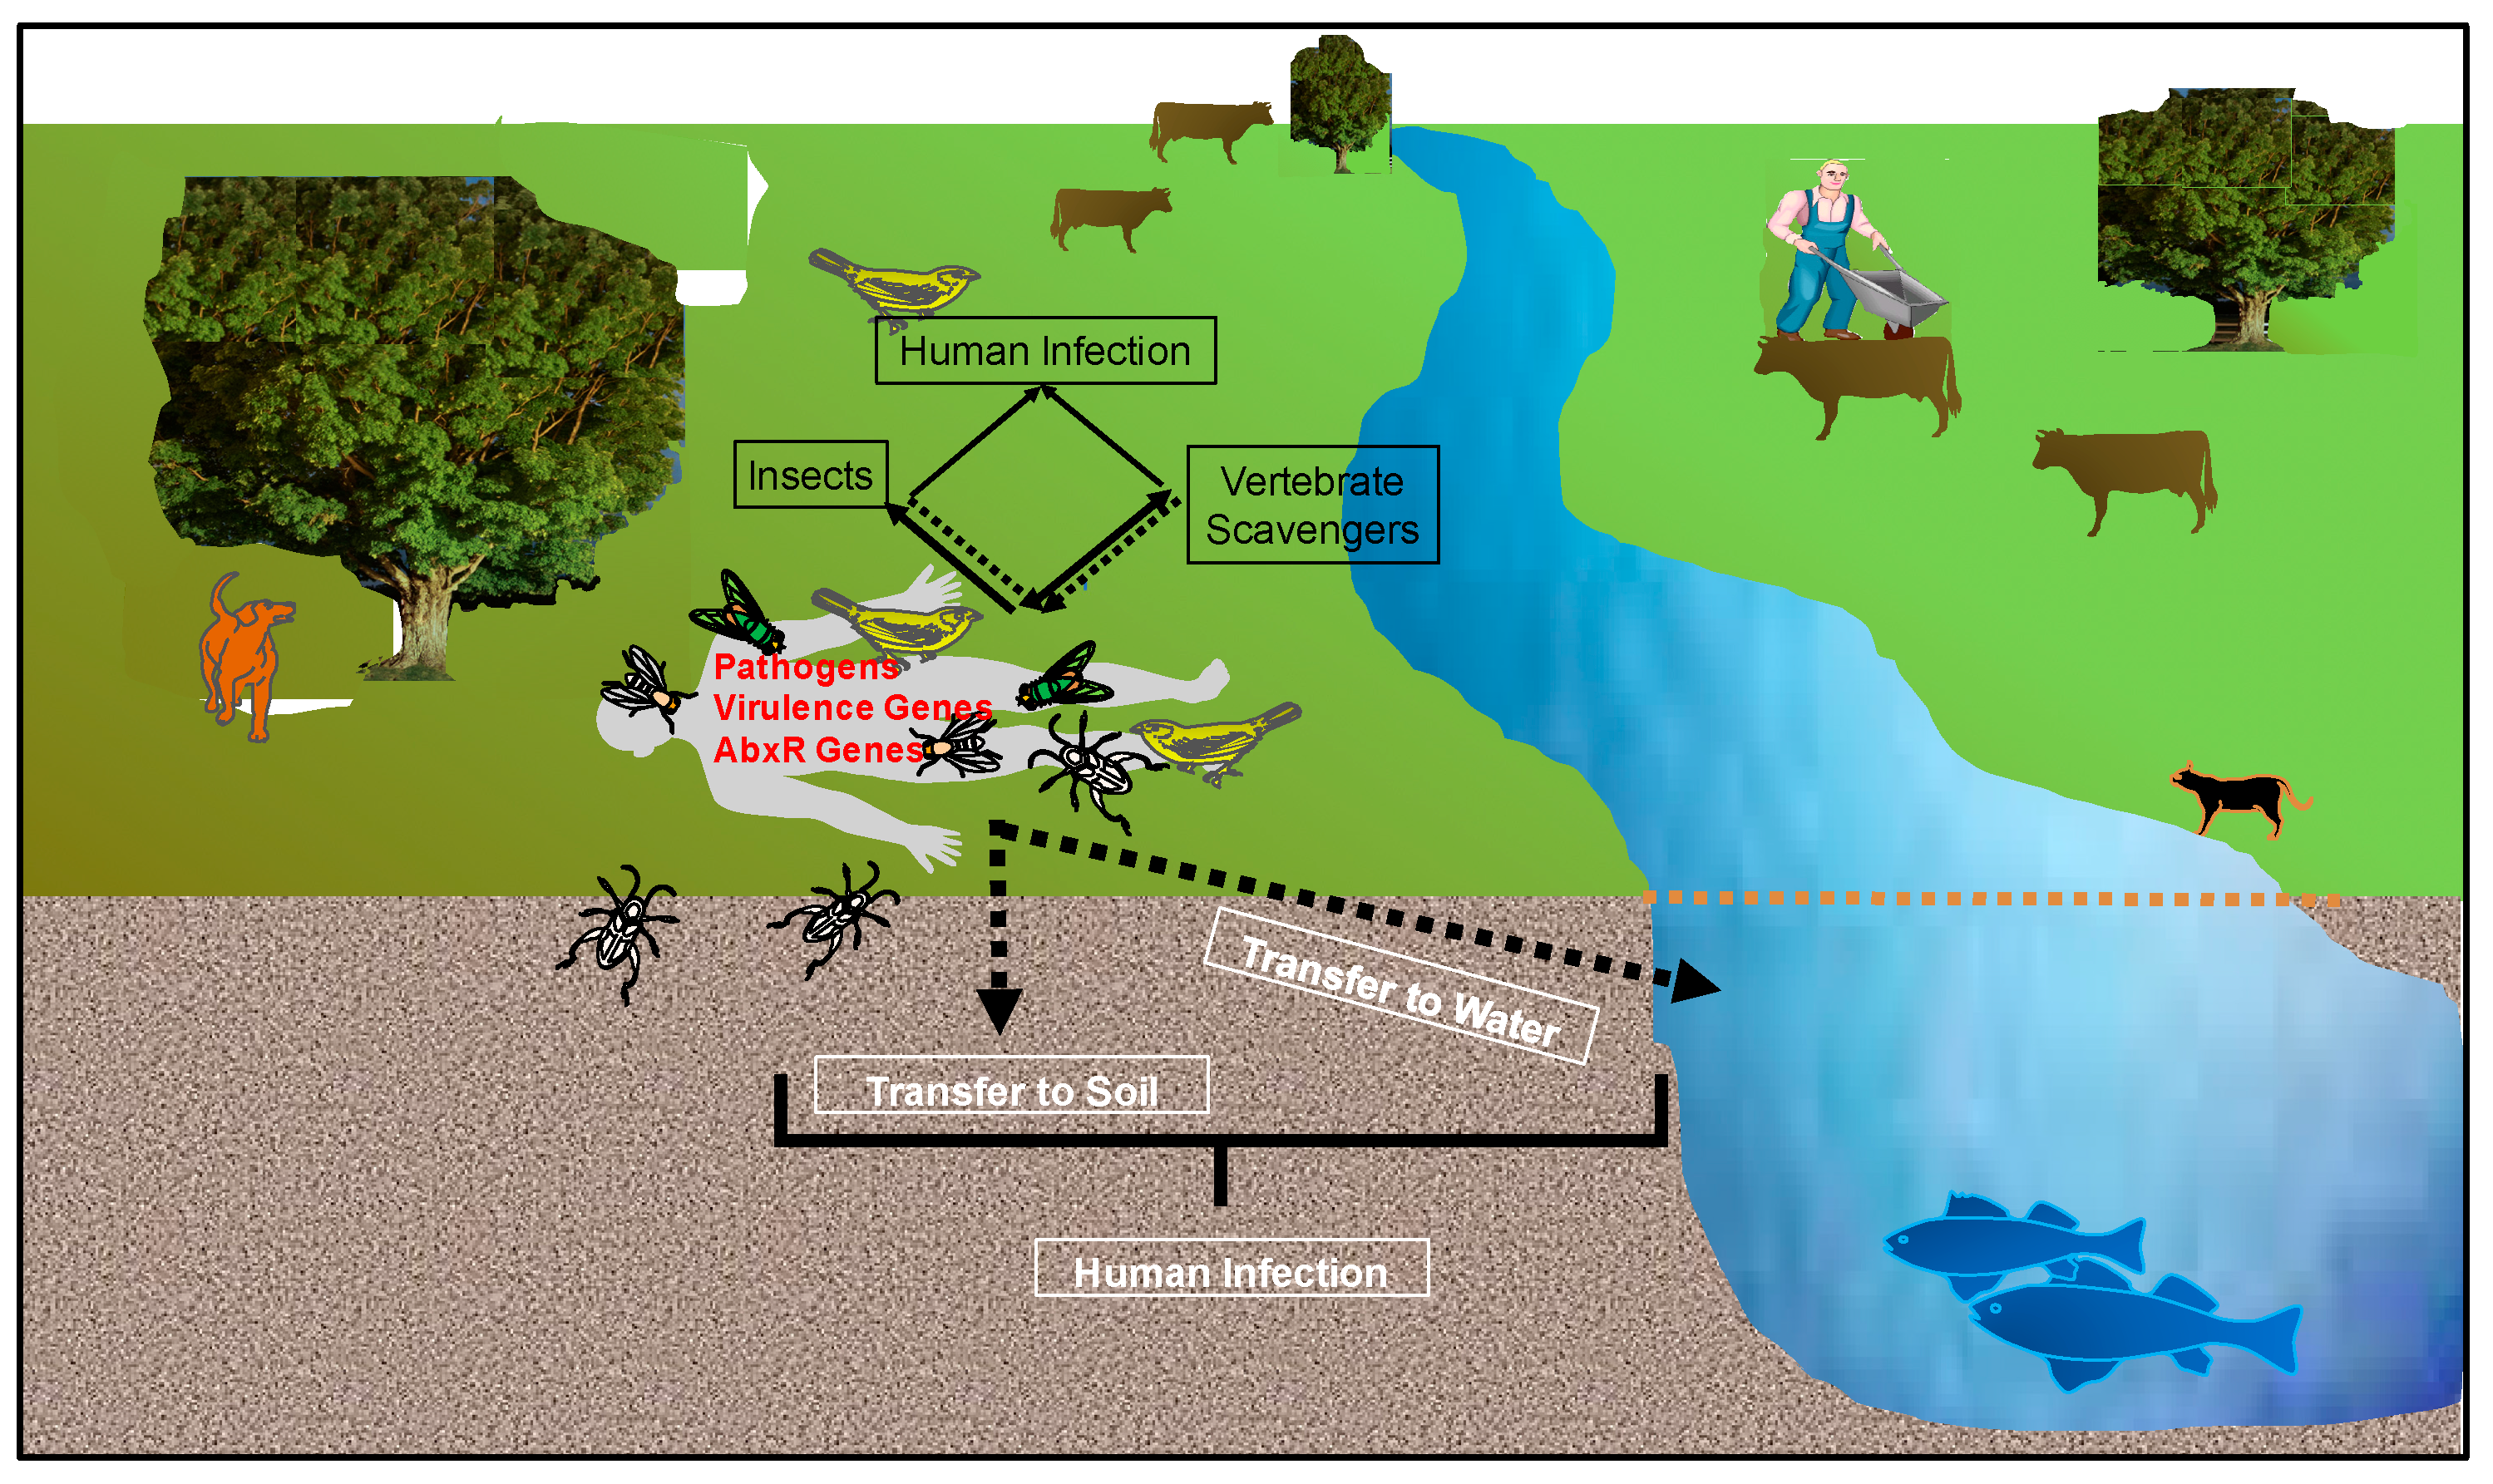 freshwater ecosystem abiotic factors